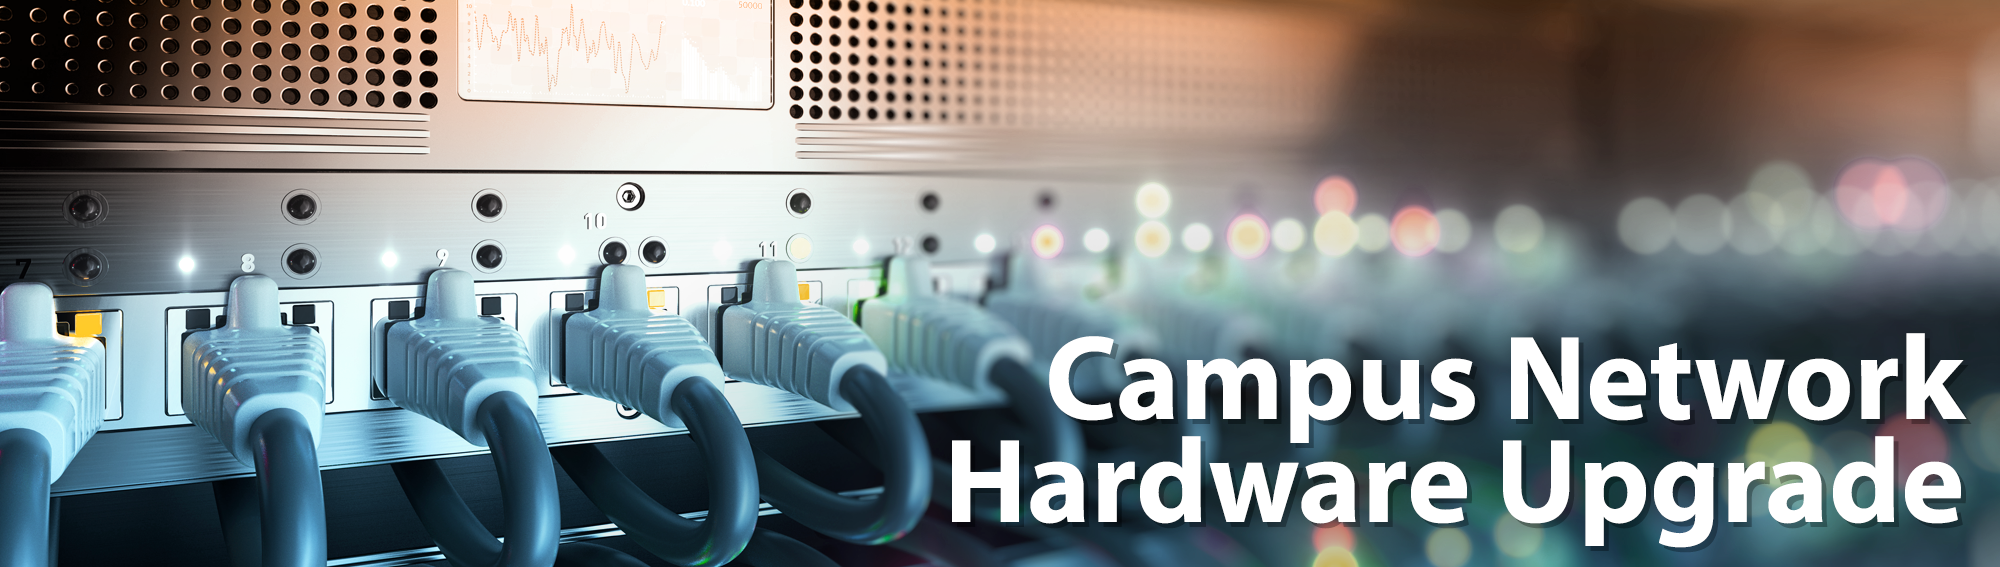 Campus Network Hardware Upgrade